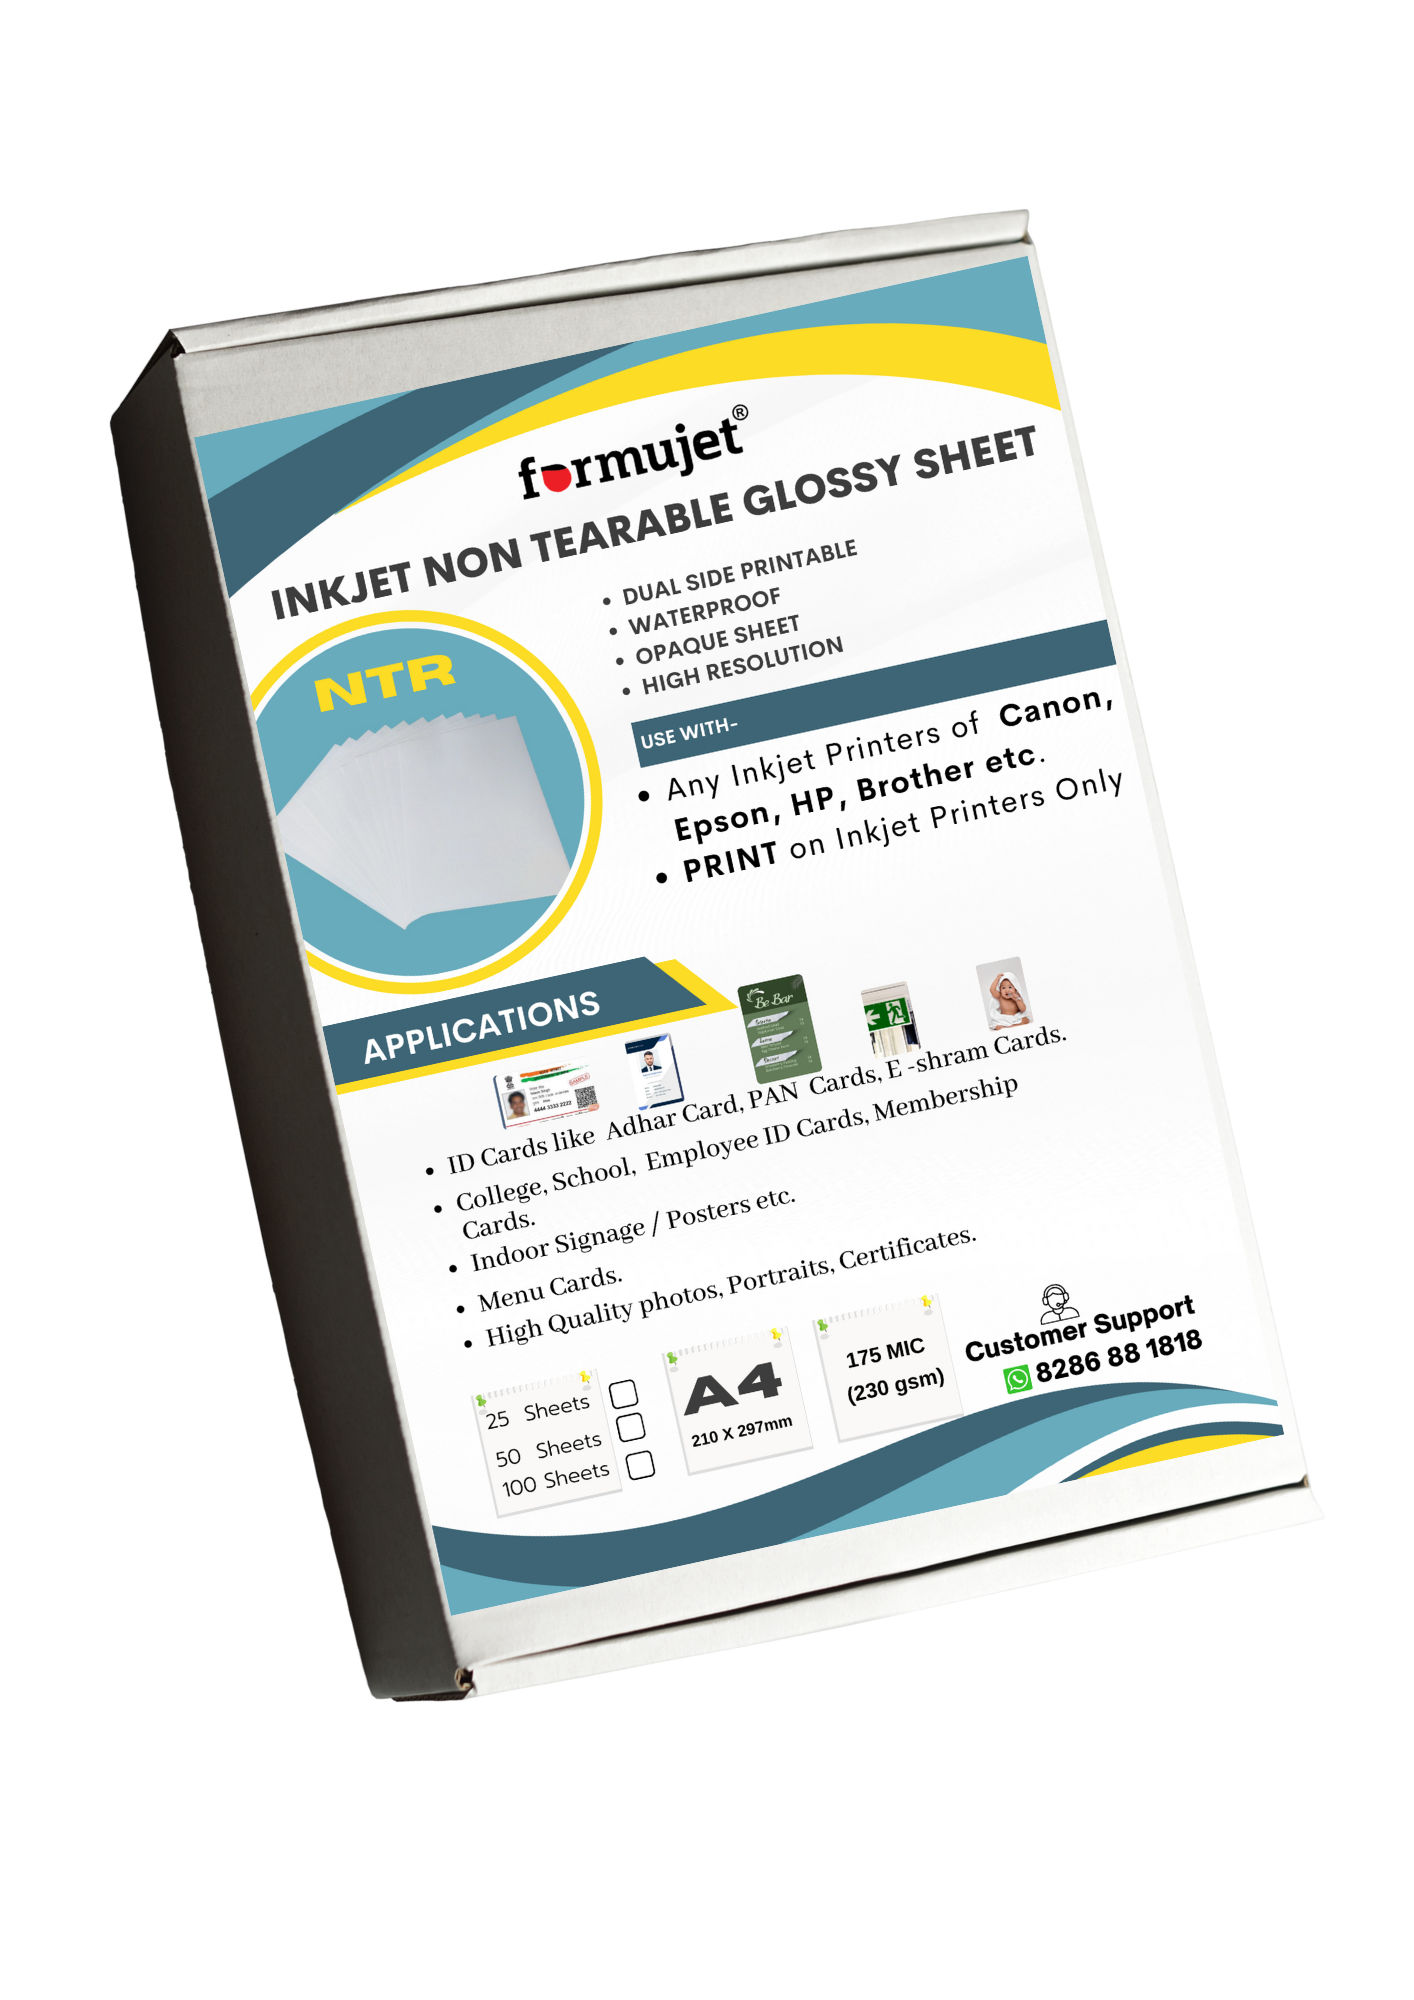 Formujet NTR Sheets - Inkjet Non Tear Glossy Waterproof Sheet for ID Cards